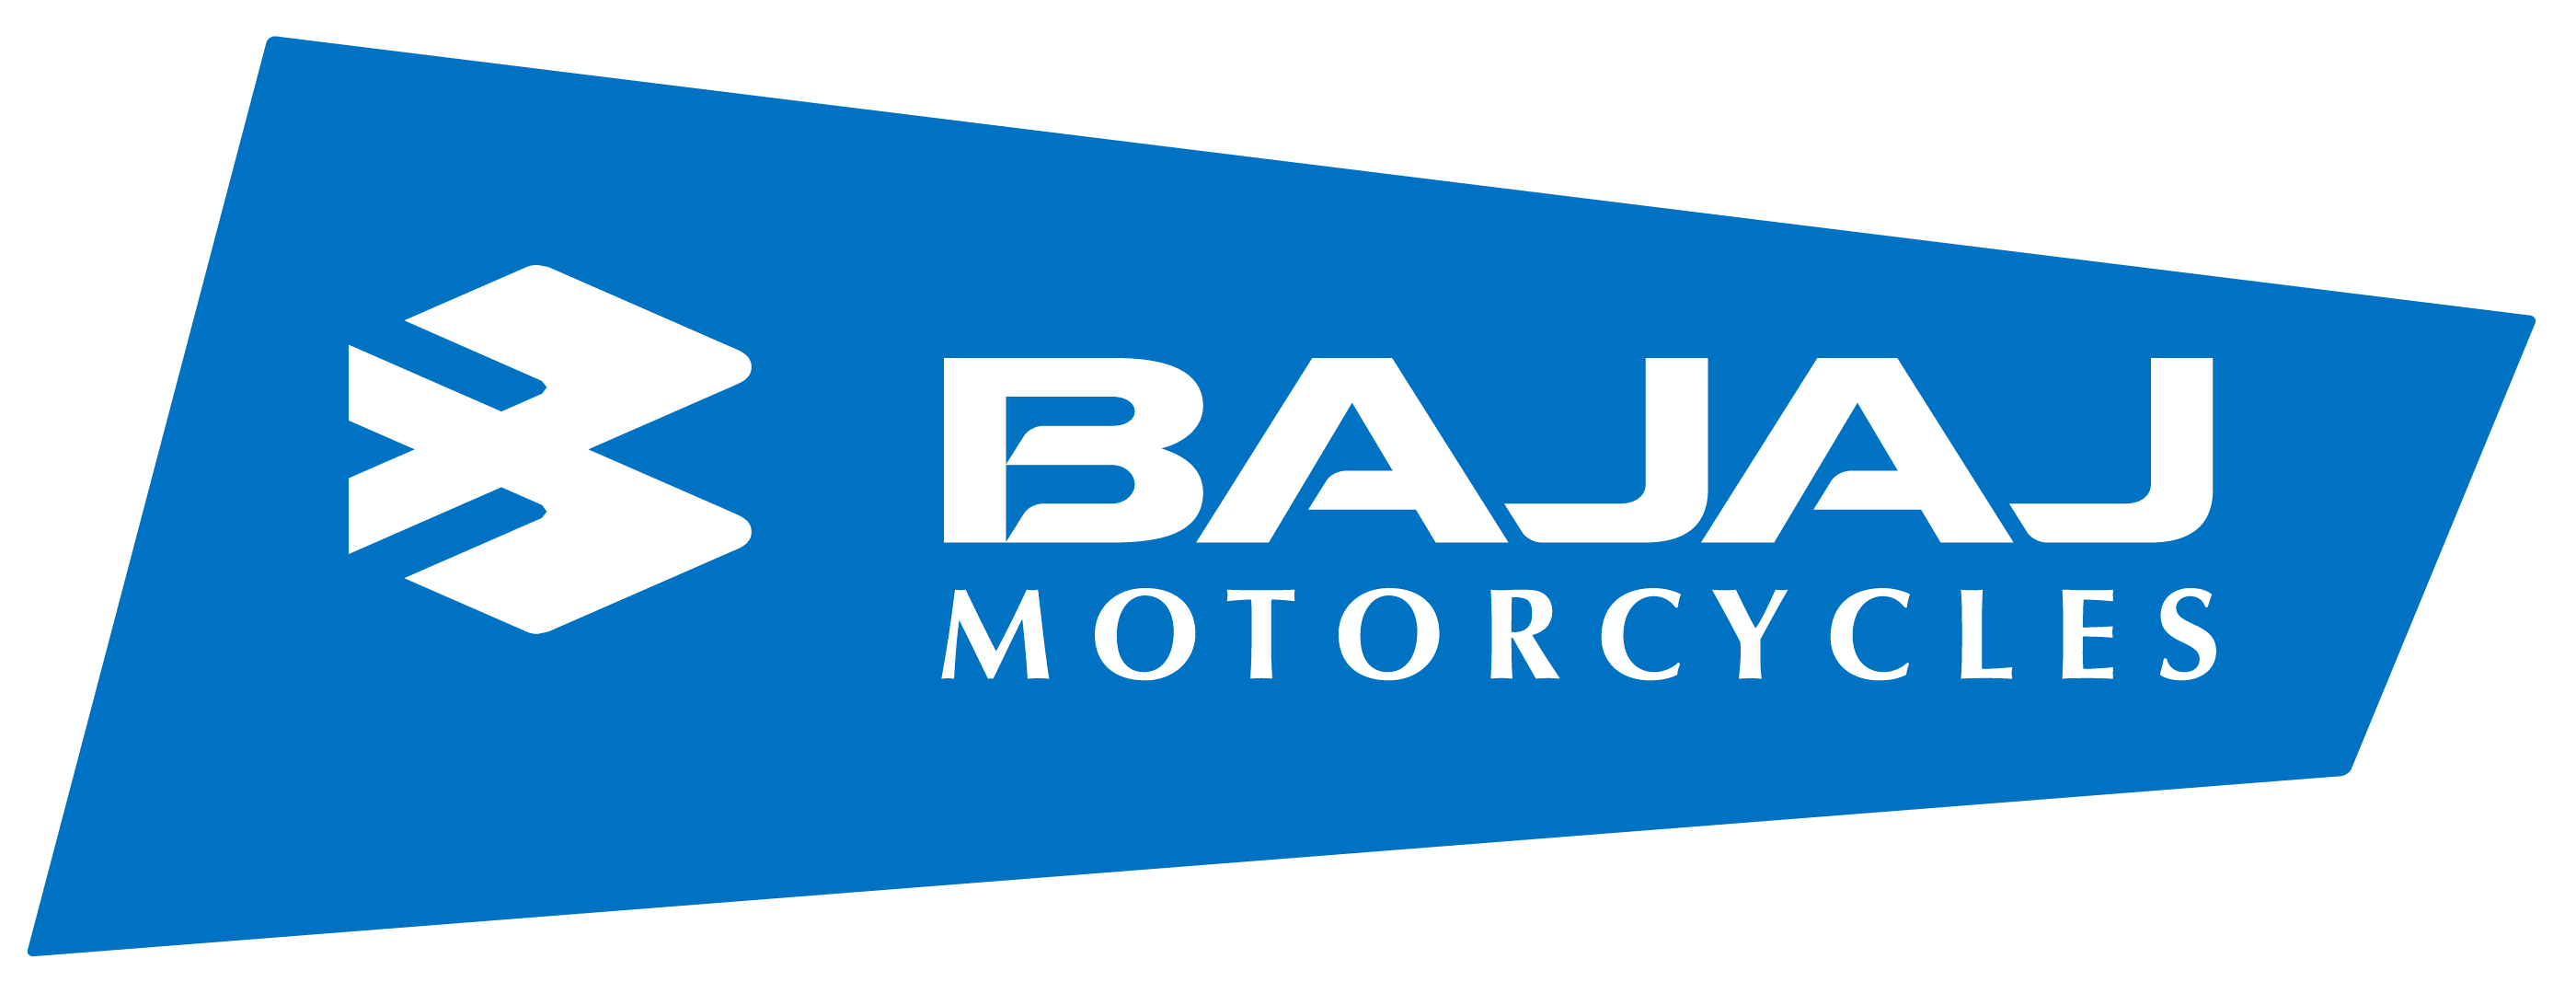 Auto Blue Logo - Bajaj Logo | Motorcycle Logos | Motorcycle, Motorcycle logo, Bajaj auto